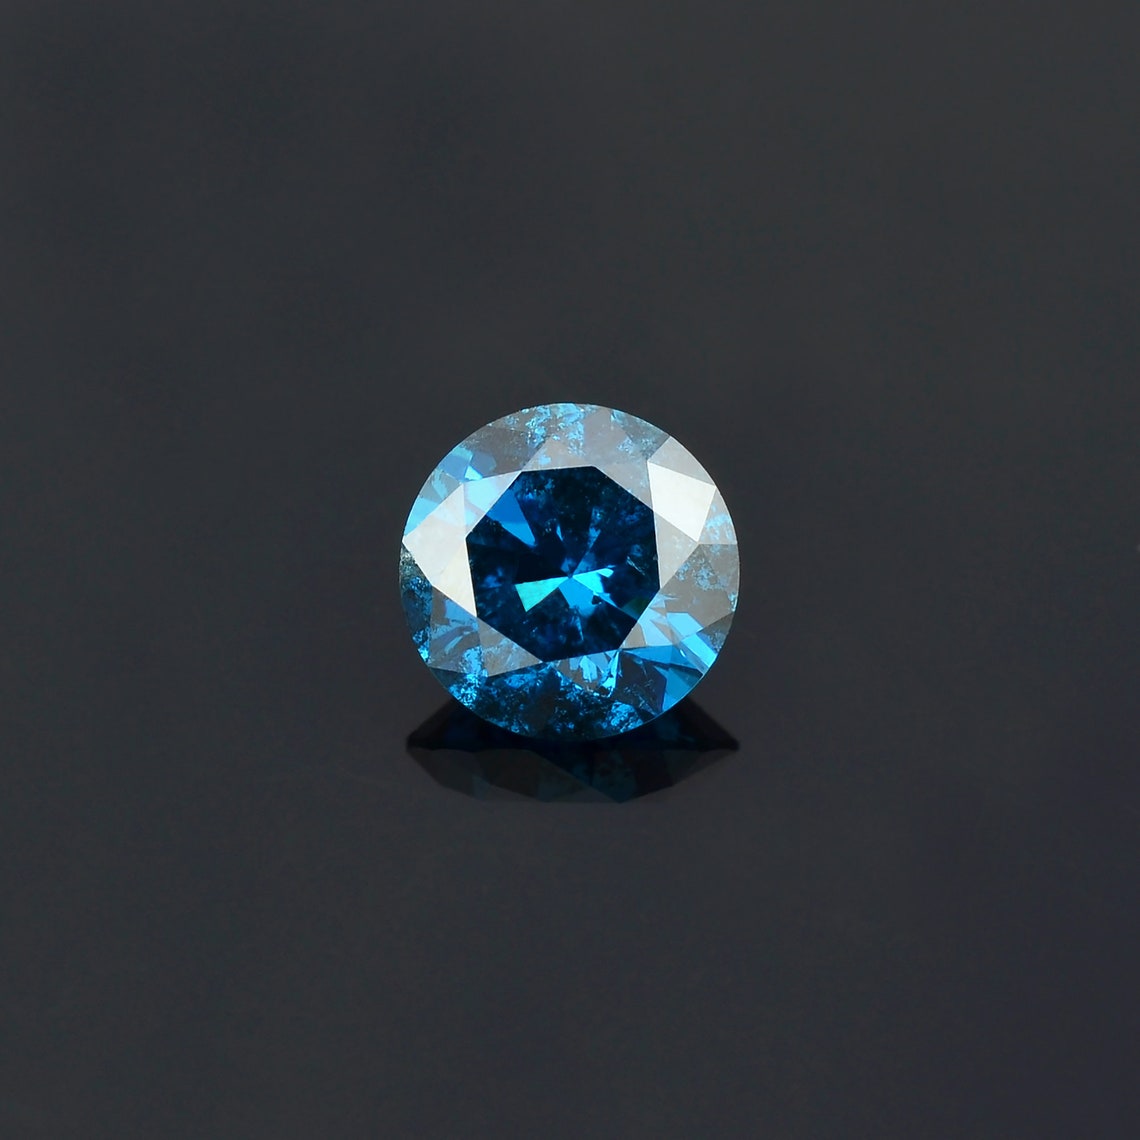 Sale 1 Piece 5.0 MM Natural Blue Loose Diamond Solitaire | Etsy